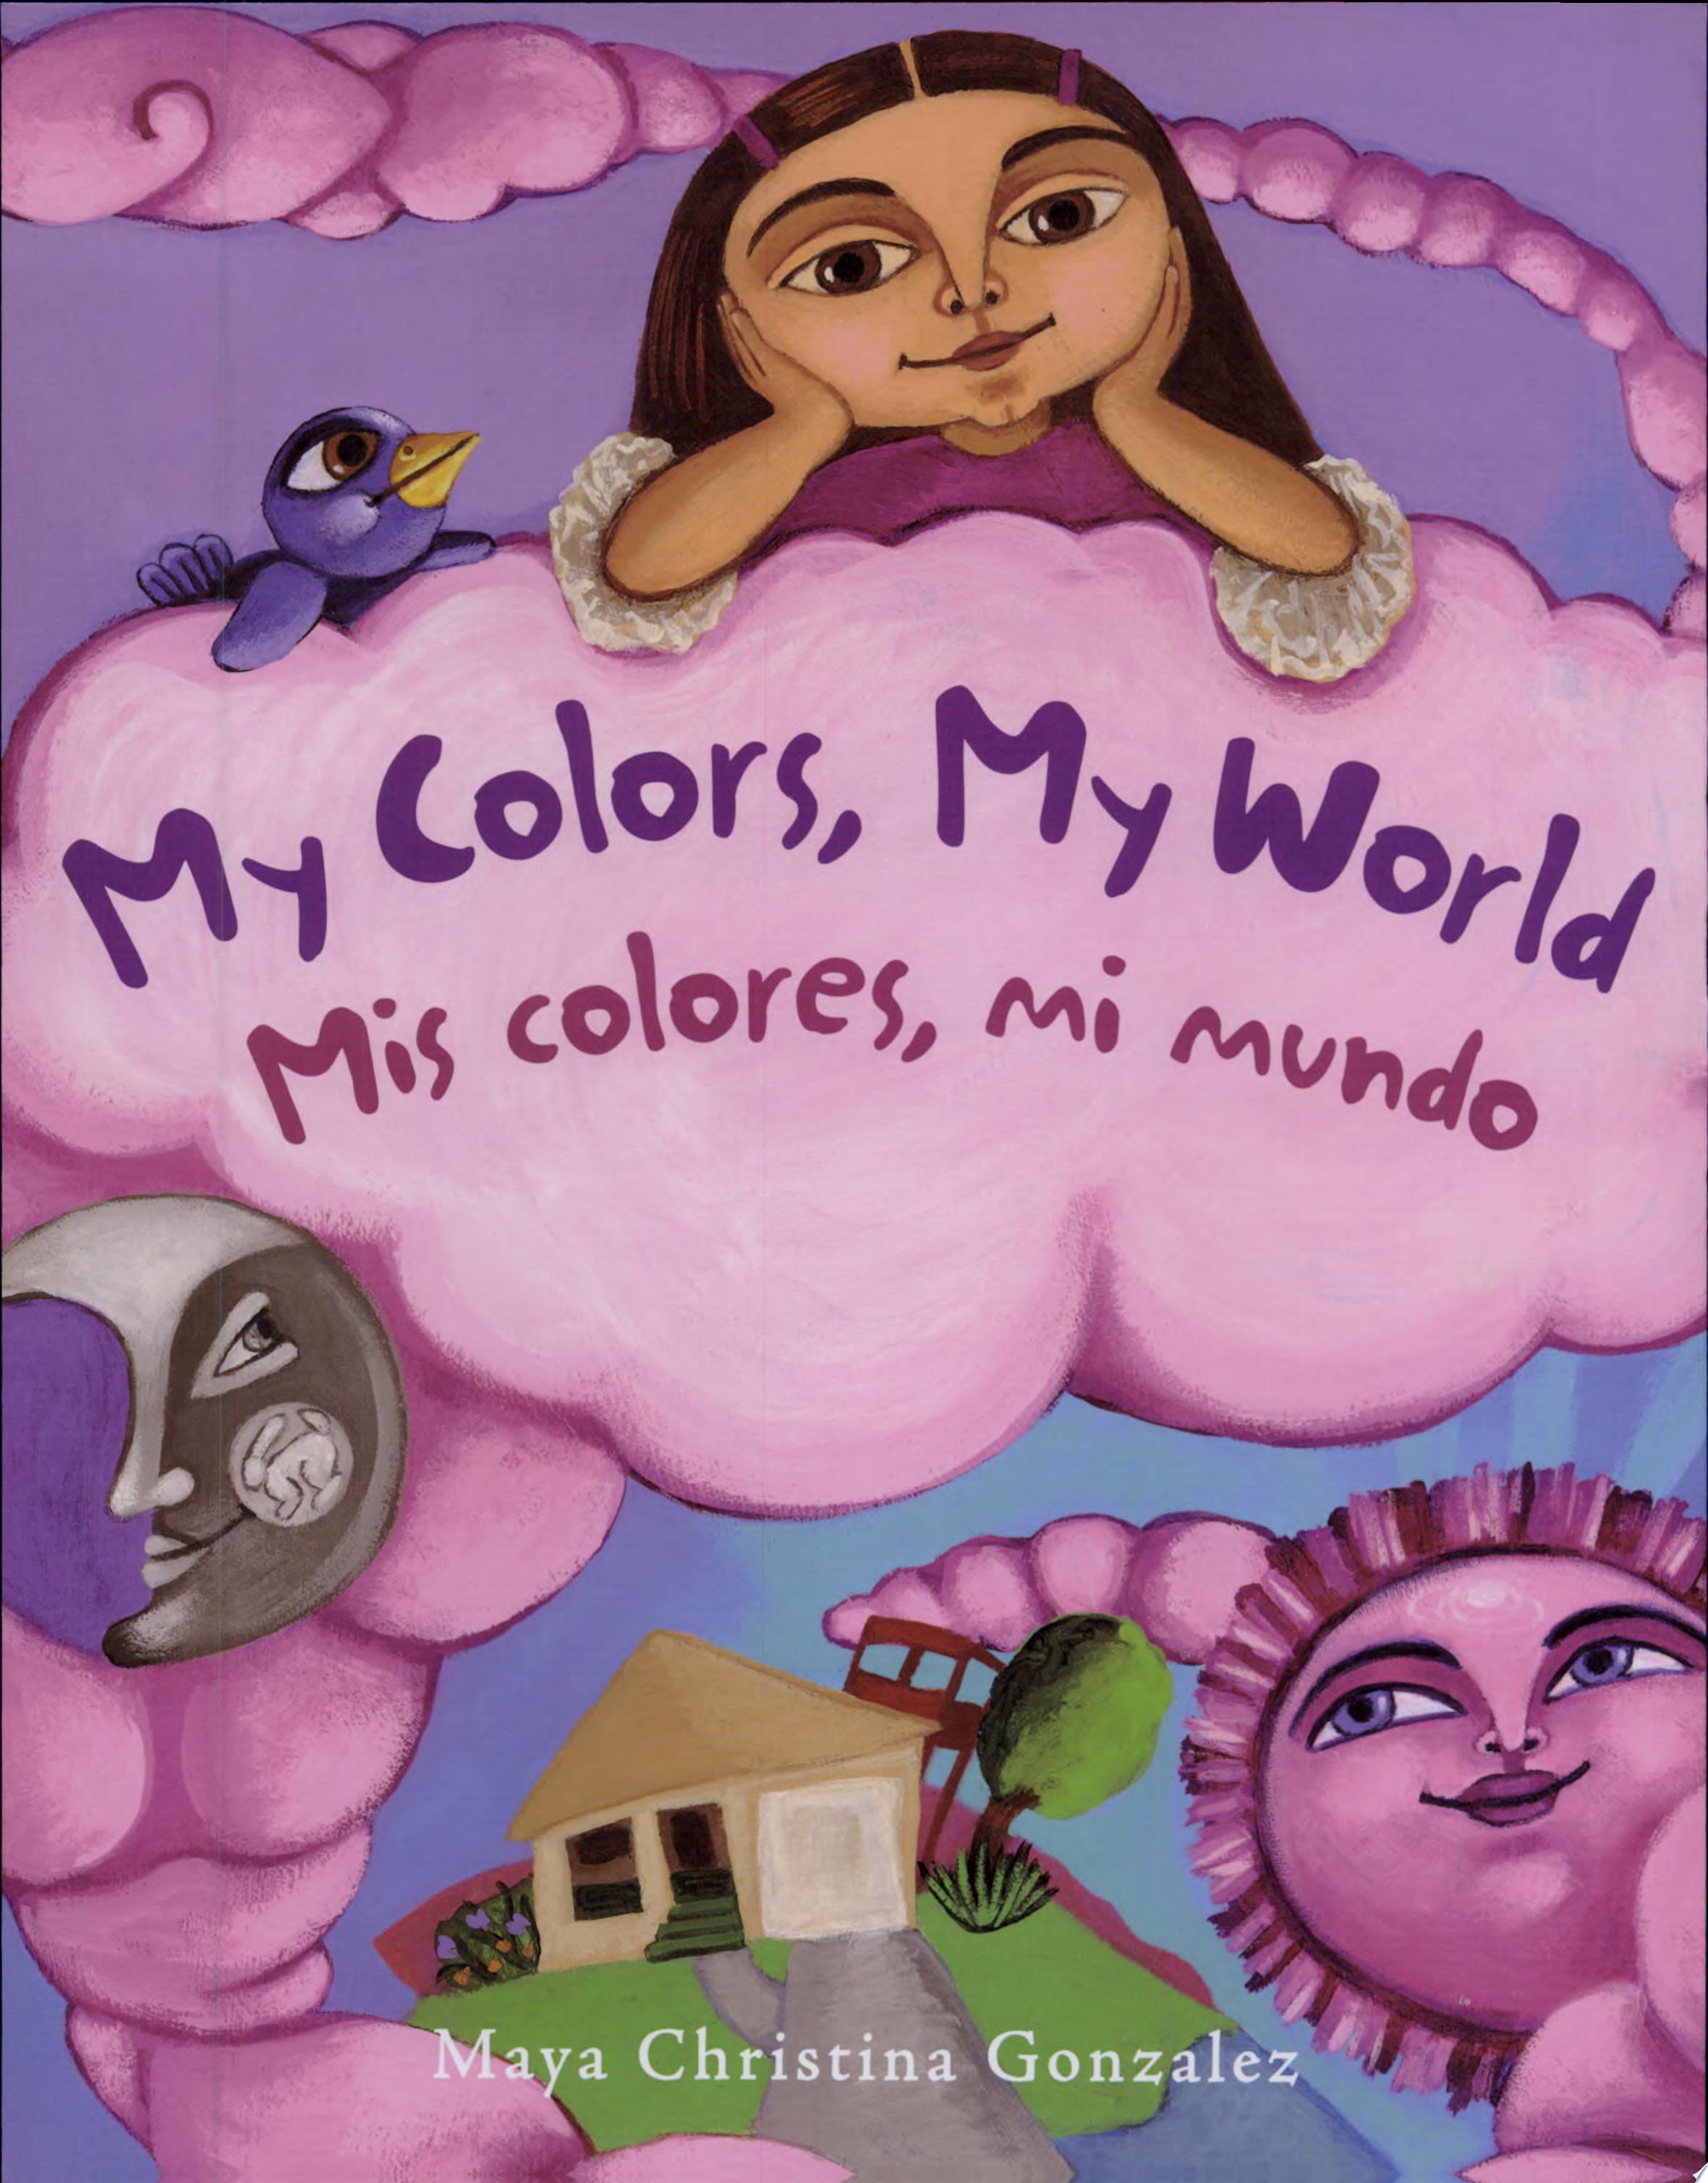 Image for "Mis colores, mi mundo"